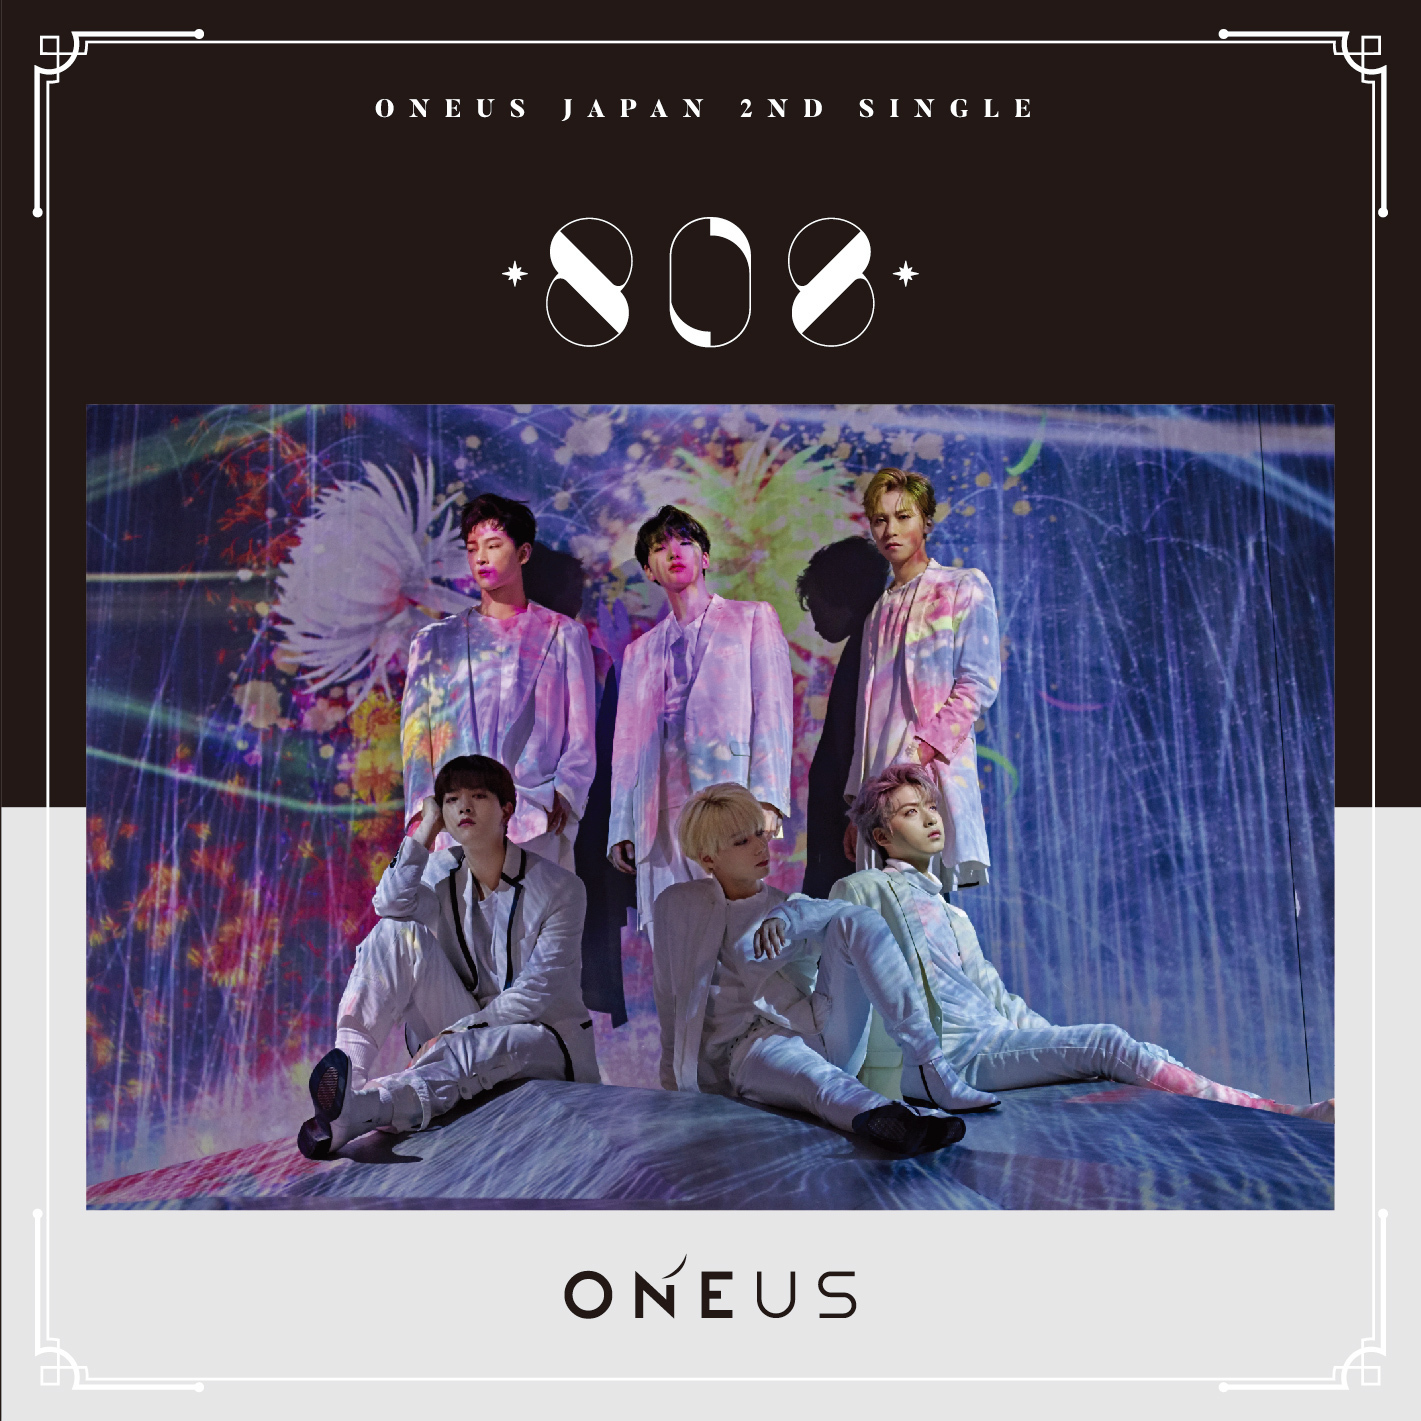 ONEUS Japan 2nd Single「808」通常盤A